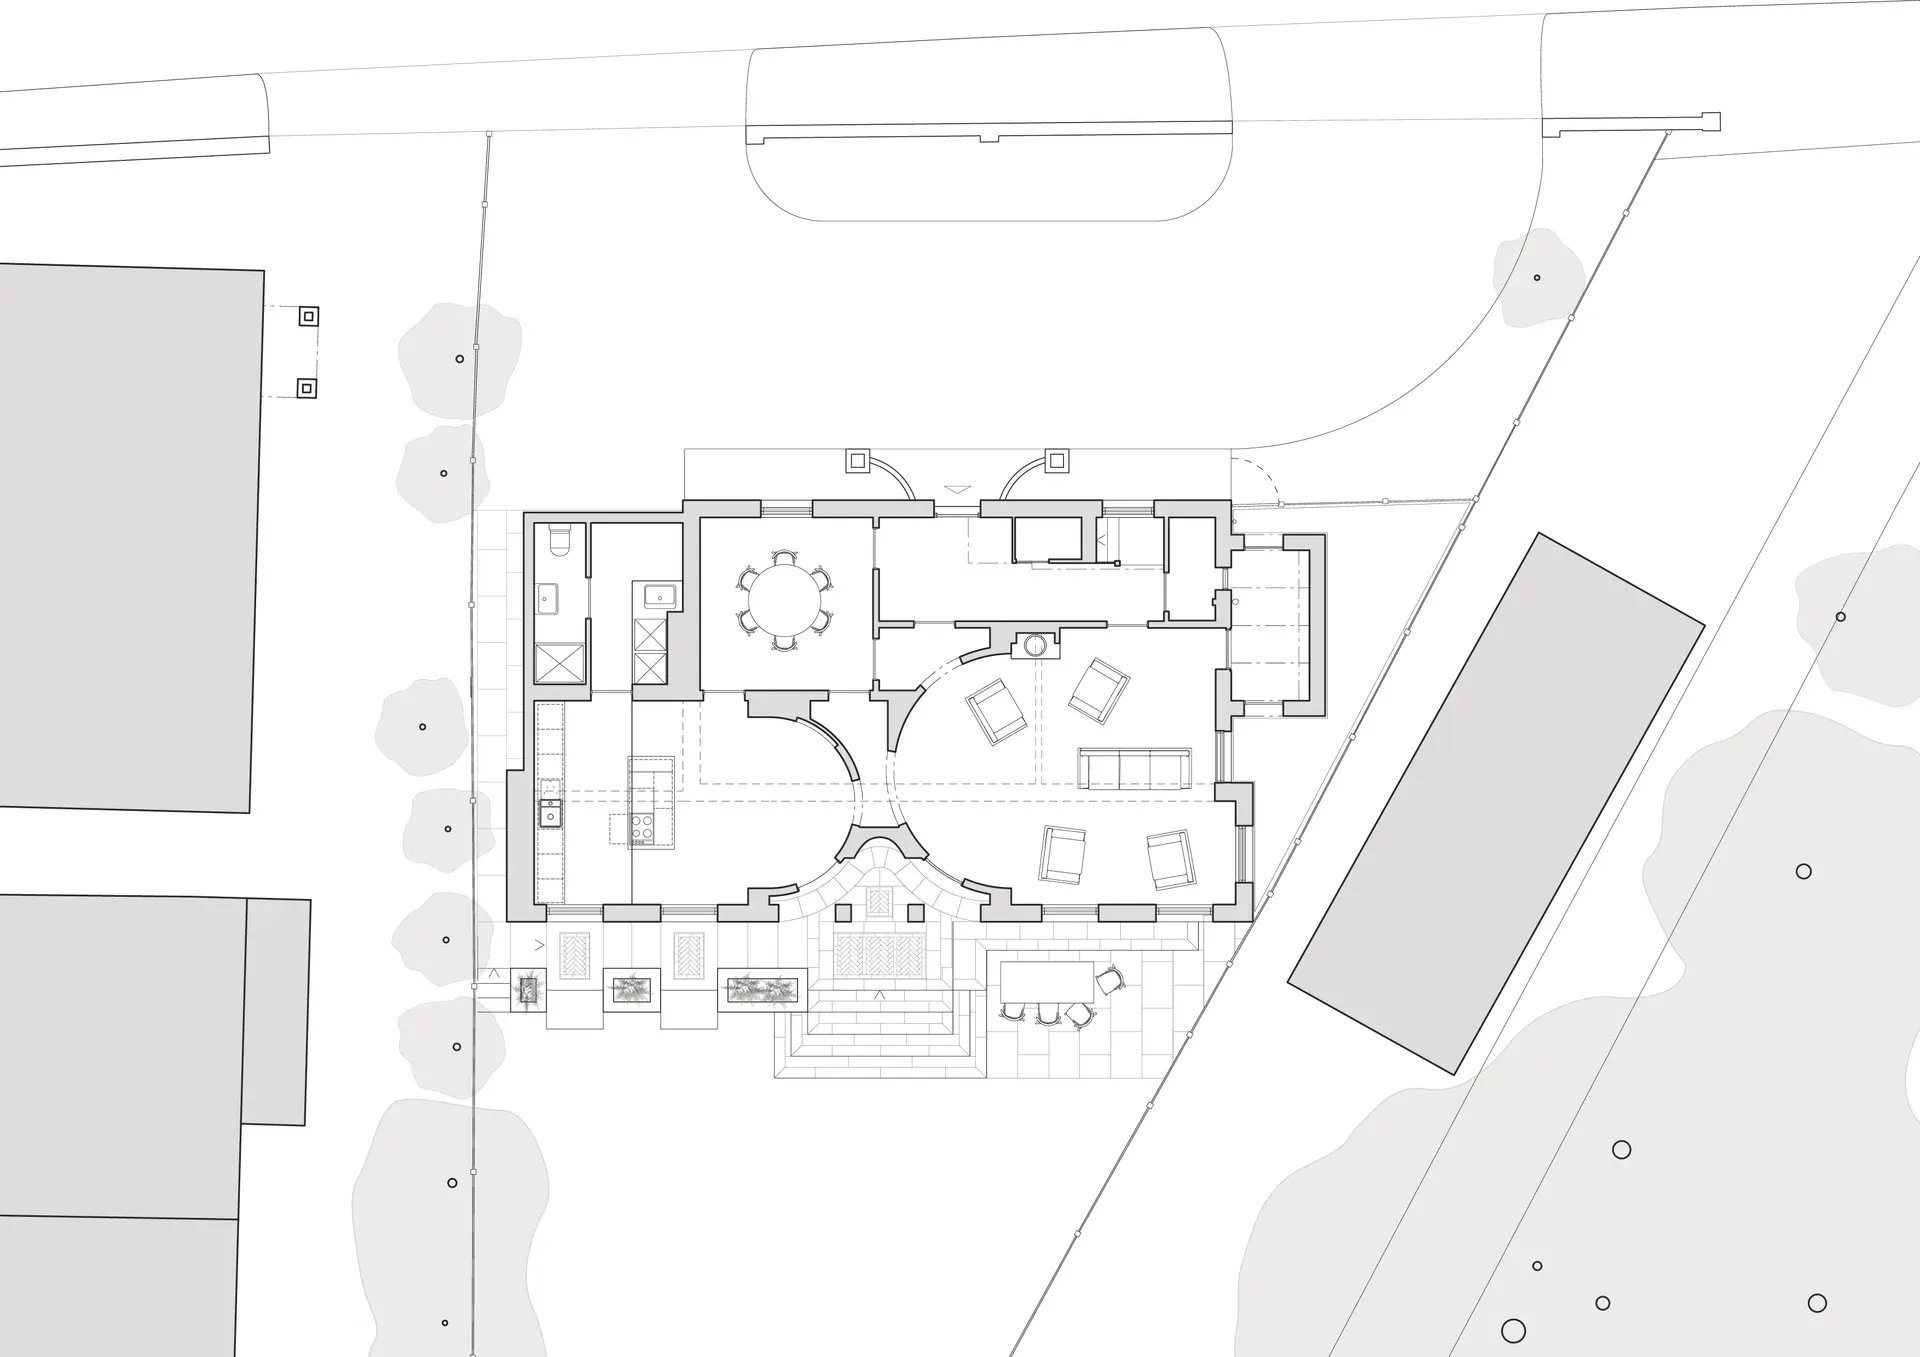 Proposed ground floor plan alternative